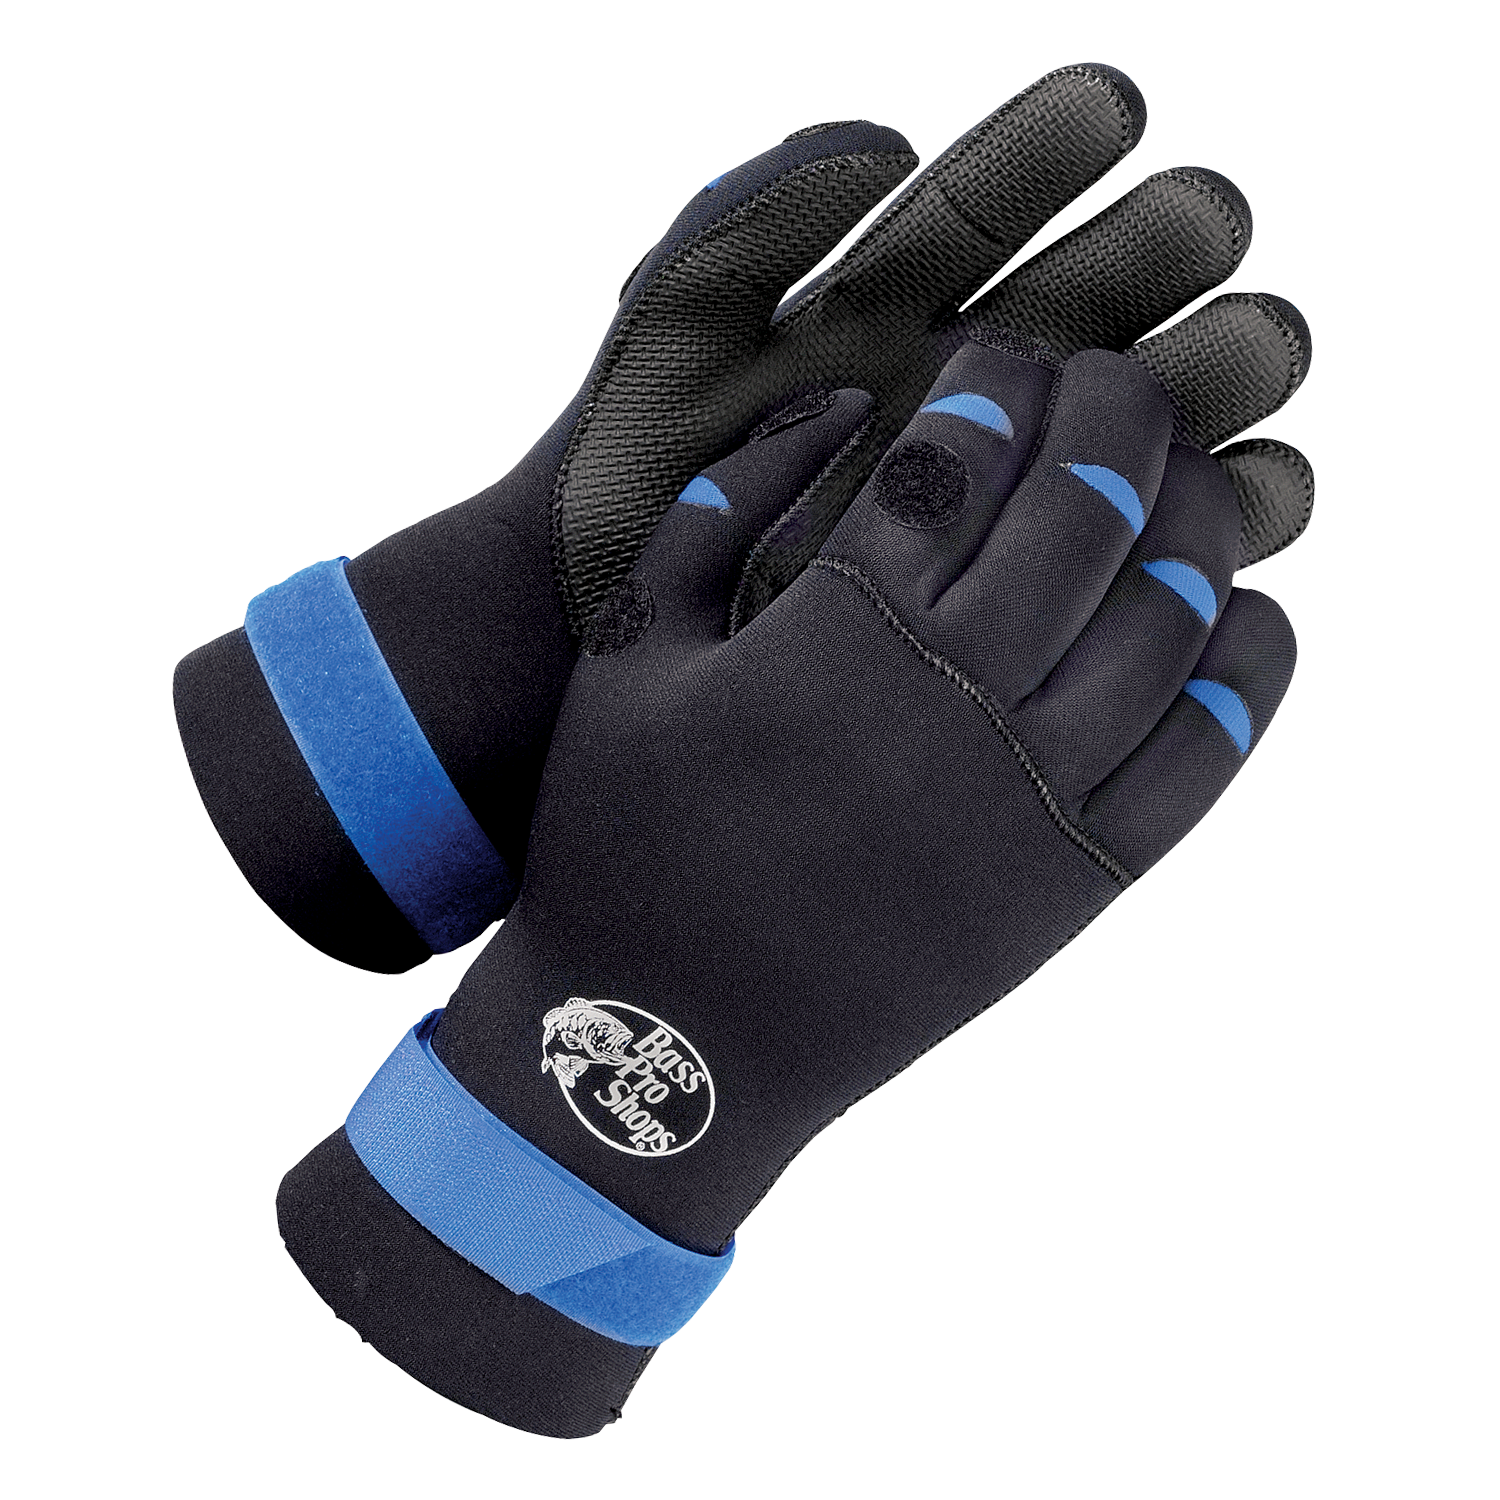 Bass Pro Shops Neoprene Fishing Gloves - XL